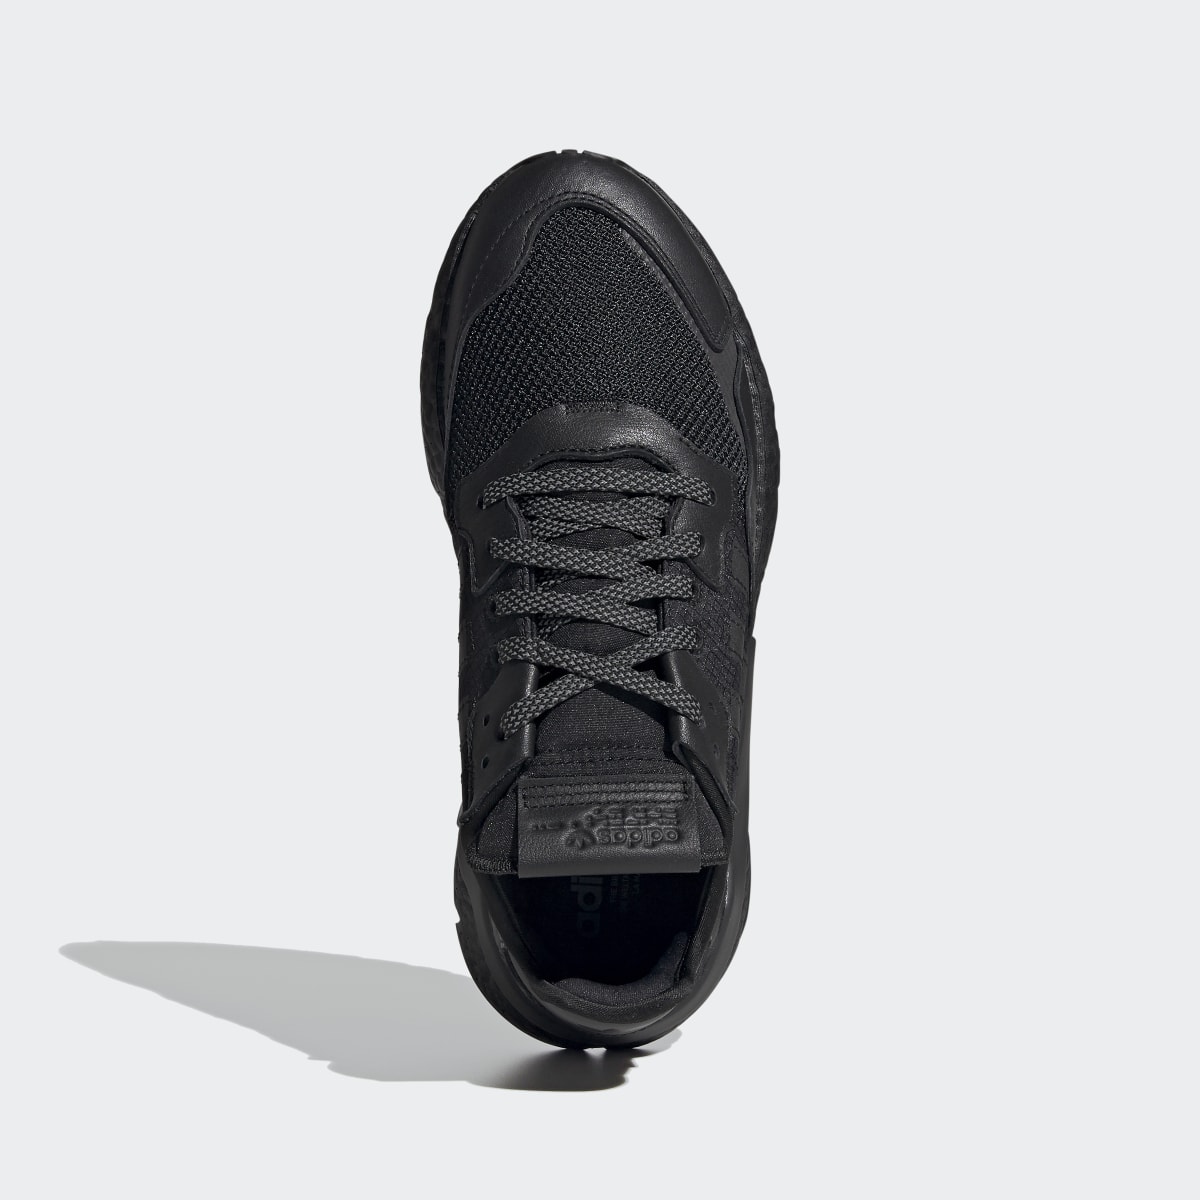 Adidas Nite Jogger Shoes. 7